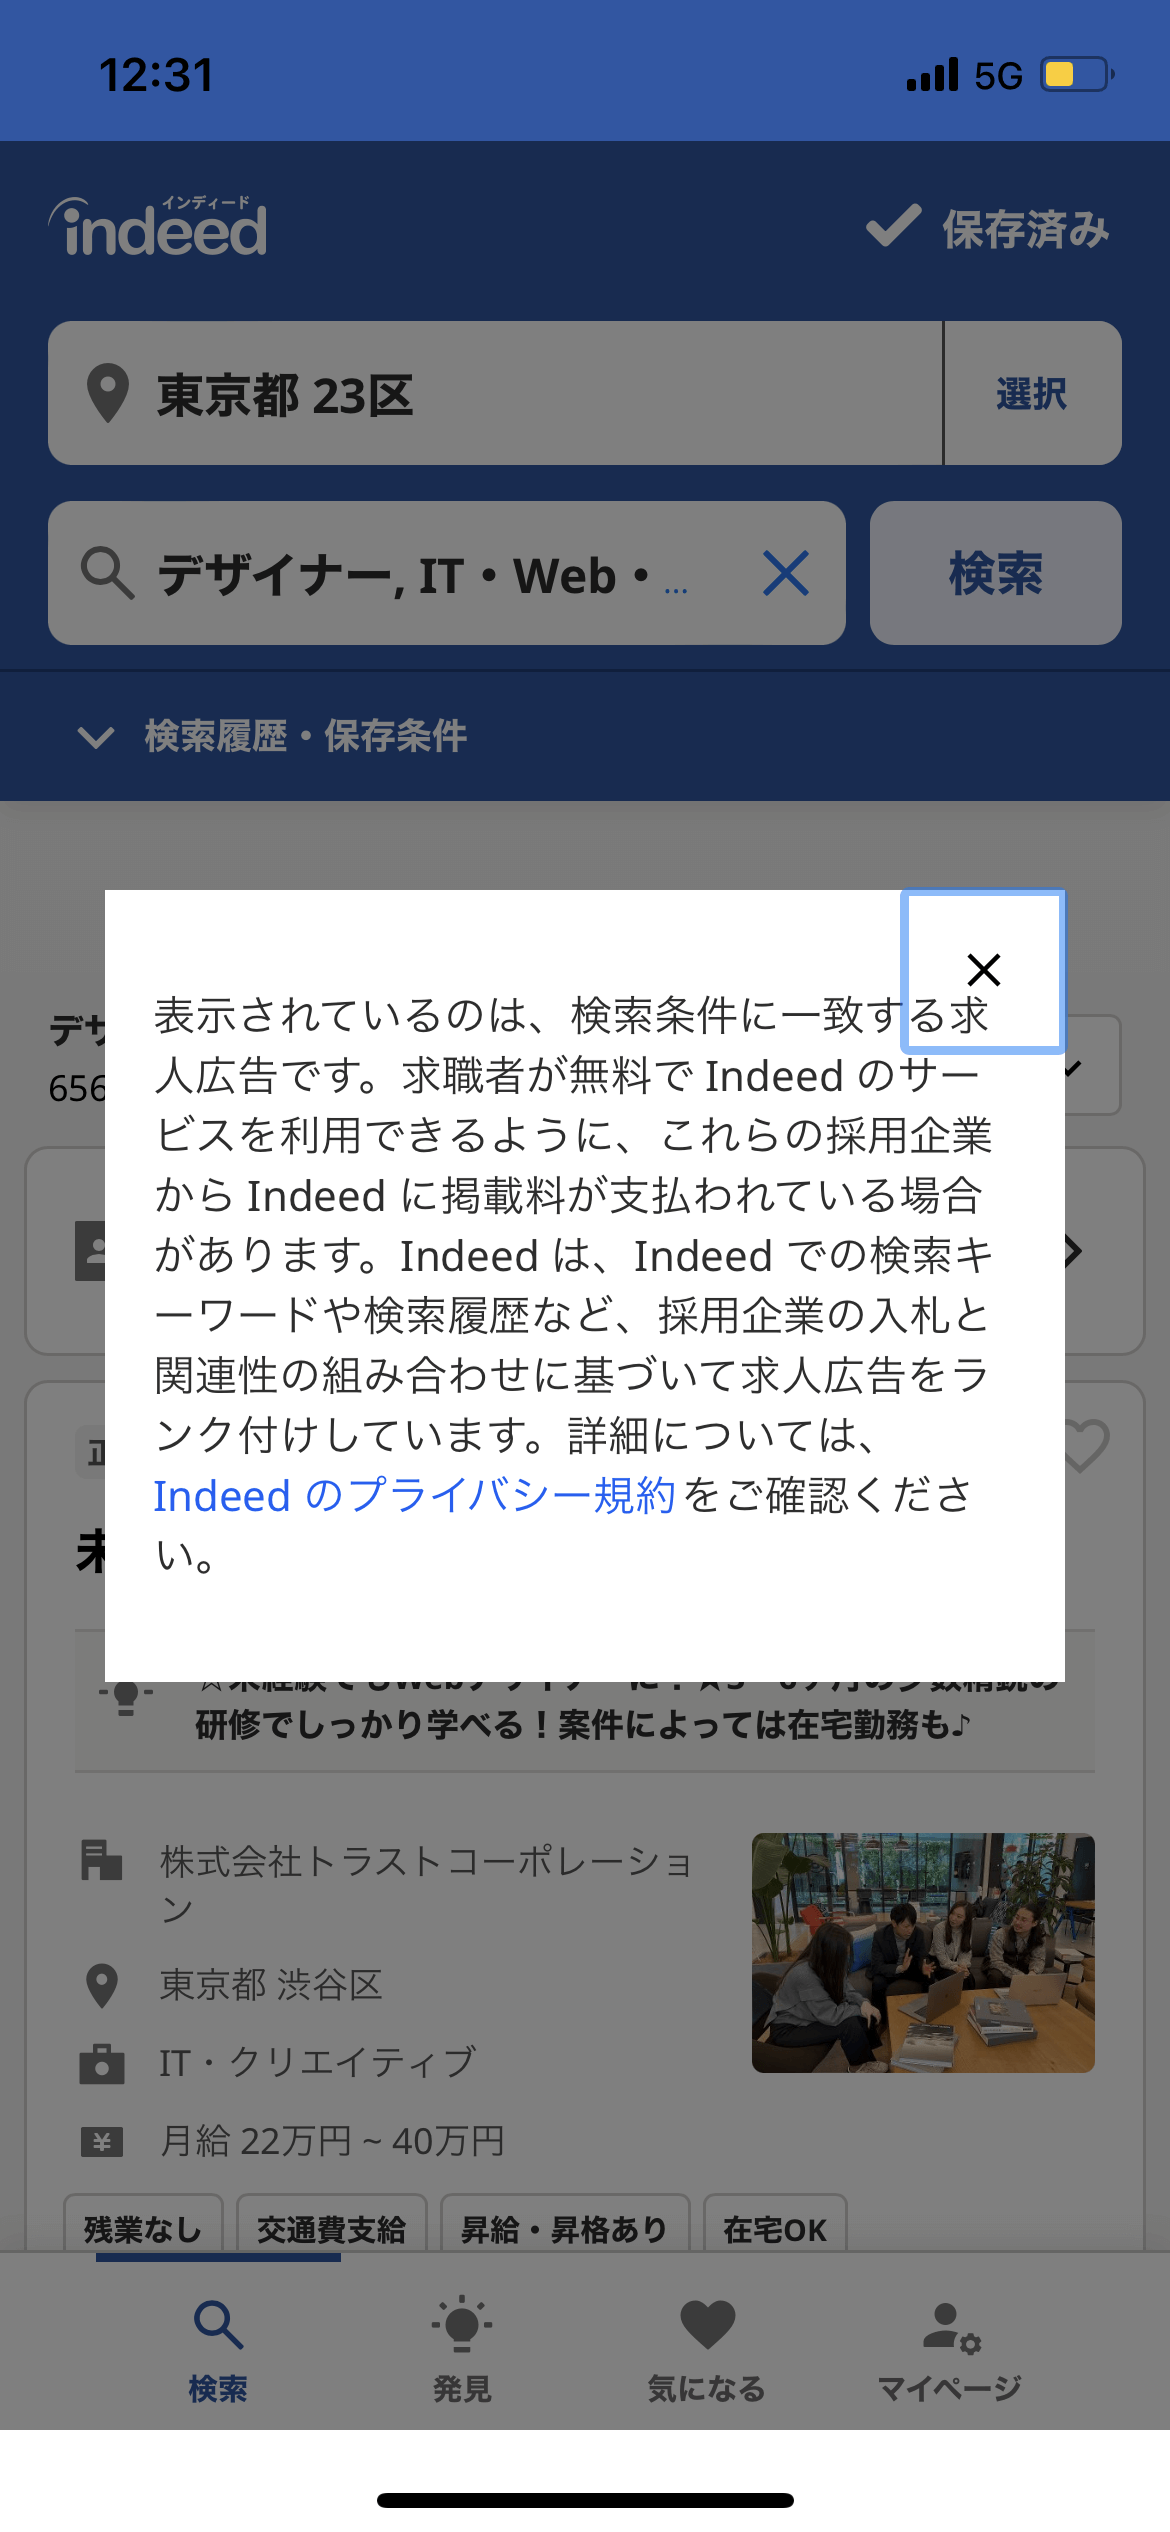 Indeed 検索 screen